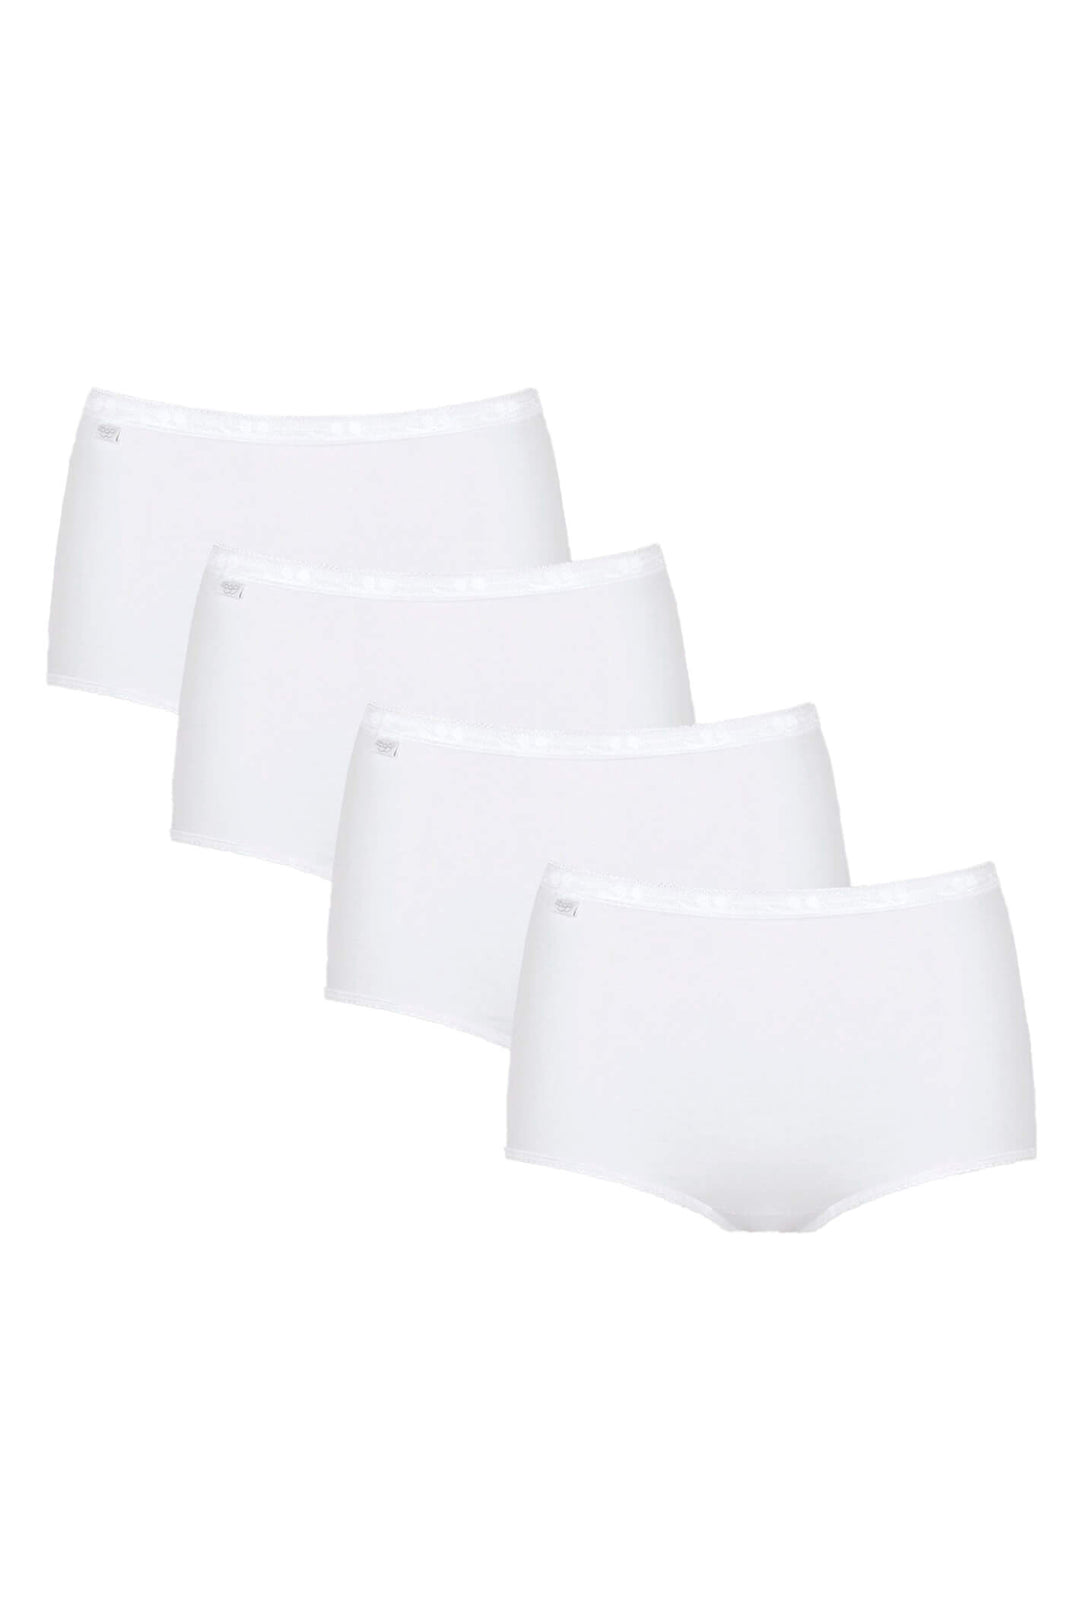 Sloggi Basic+ White 3+1 Pack Maxi Cotton Briefs 10028378 0003 - Shirley Allum Boutique